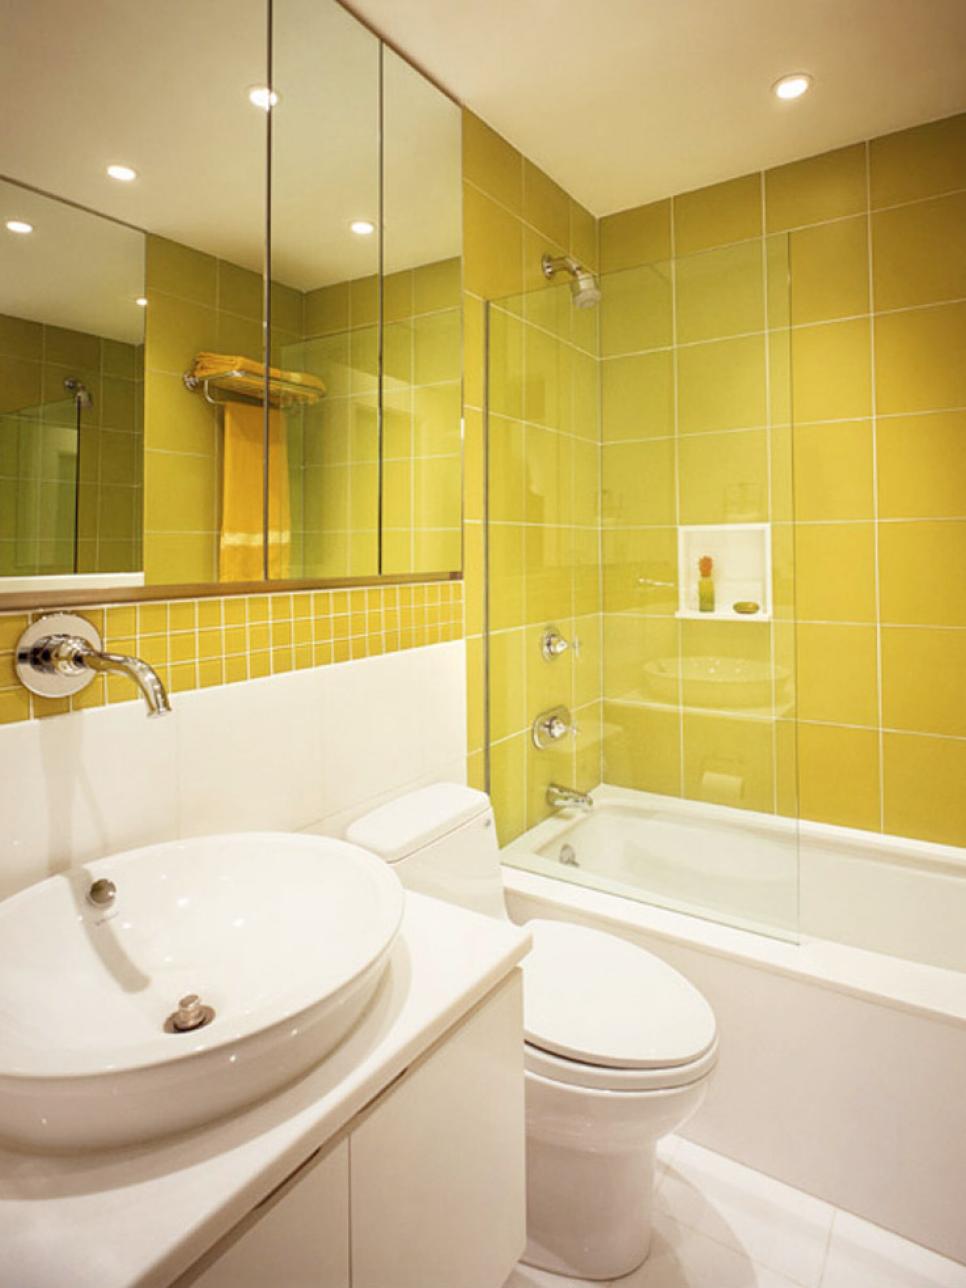 Yellow Bathrooms: 7 Bright Ideas | HGTV
